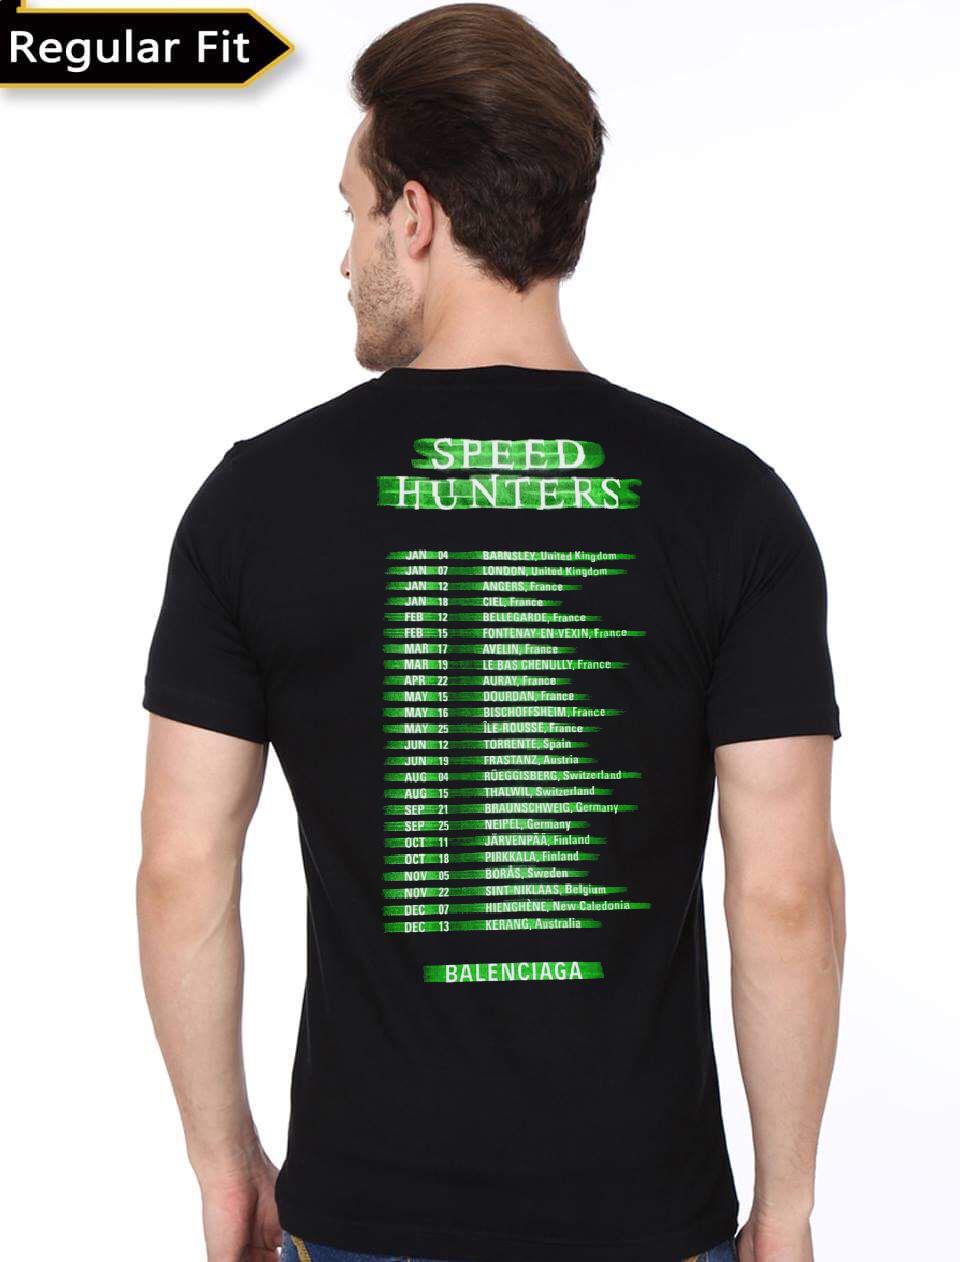 Balenciaga Speedhunters T Shirt   Swag Shirts